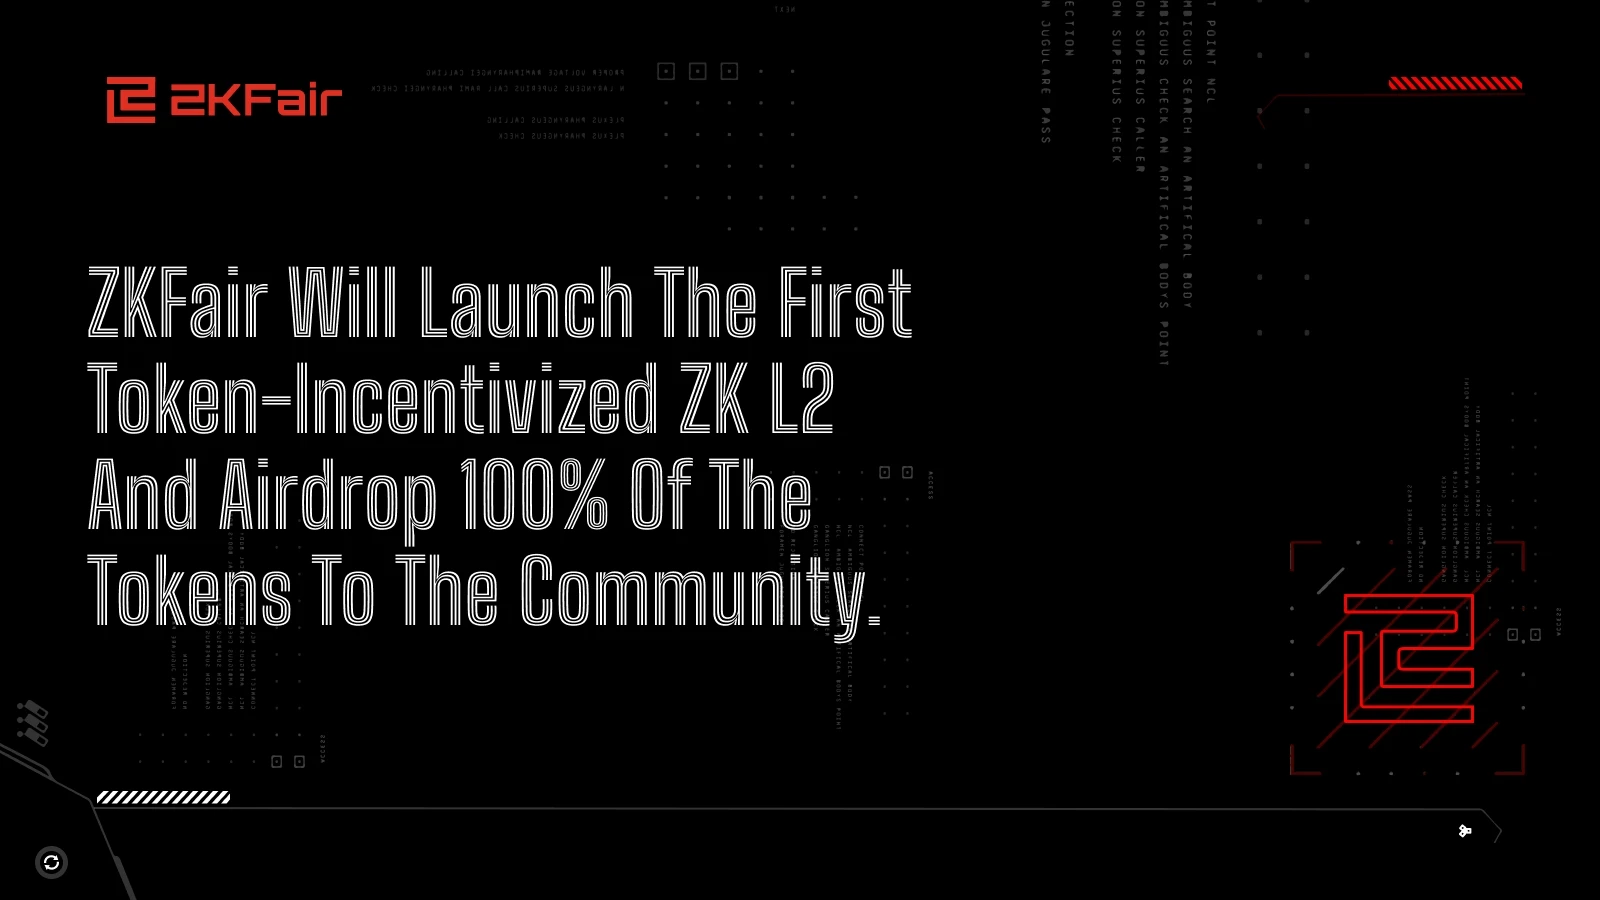 ZKFair将发布代币激励的ZK L2，并向社区空投所有代币